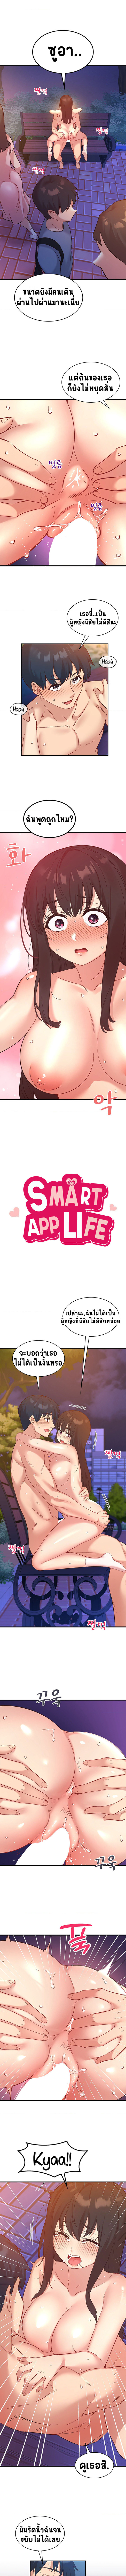 Smart App Life 20 (2)